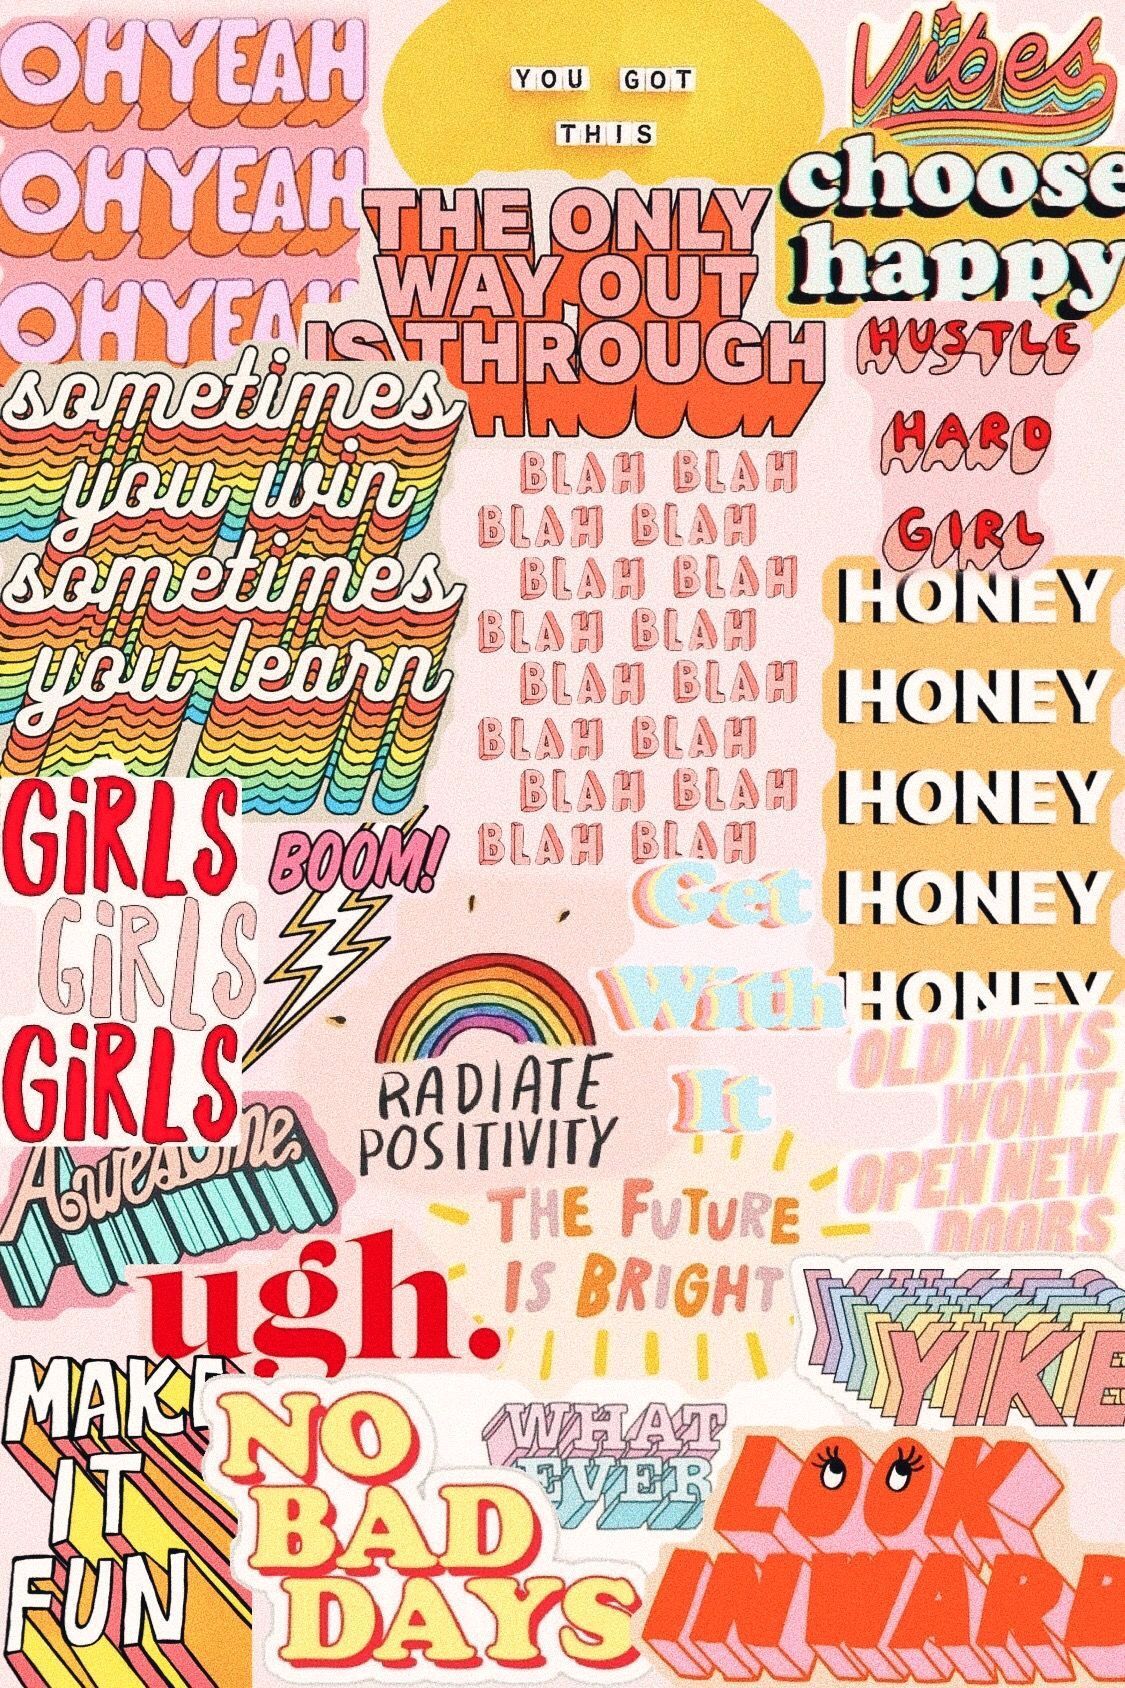 Lovely Vsco Girl Wallpaper The Only Way Out Through 2019. Hippie wallpaper, Aesthetic iphone wallpaper, Cartoon wallpaper